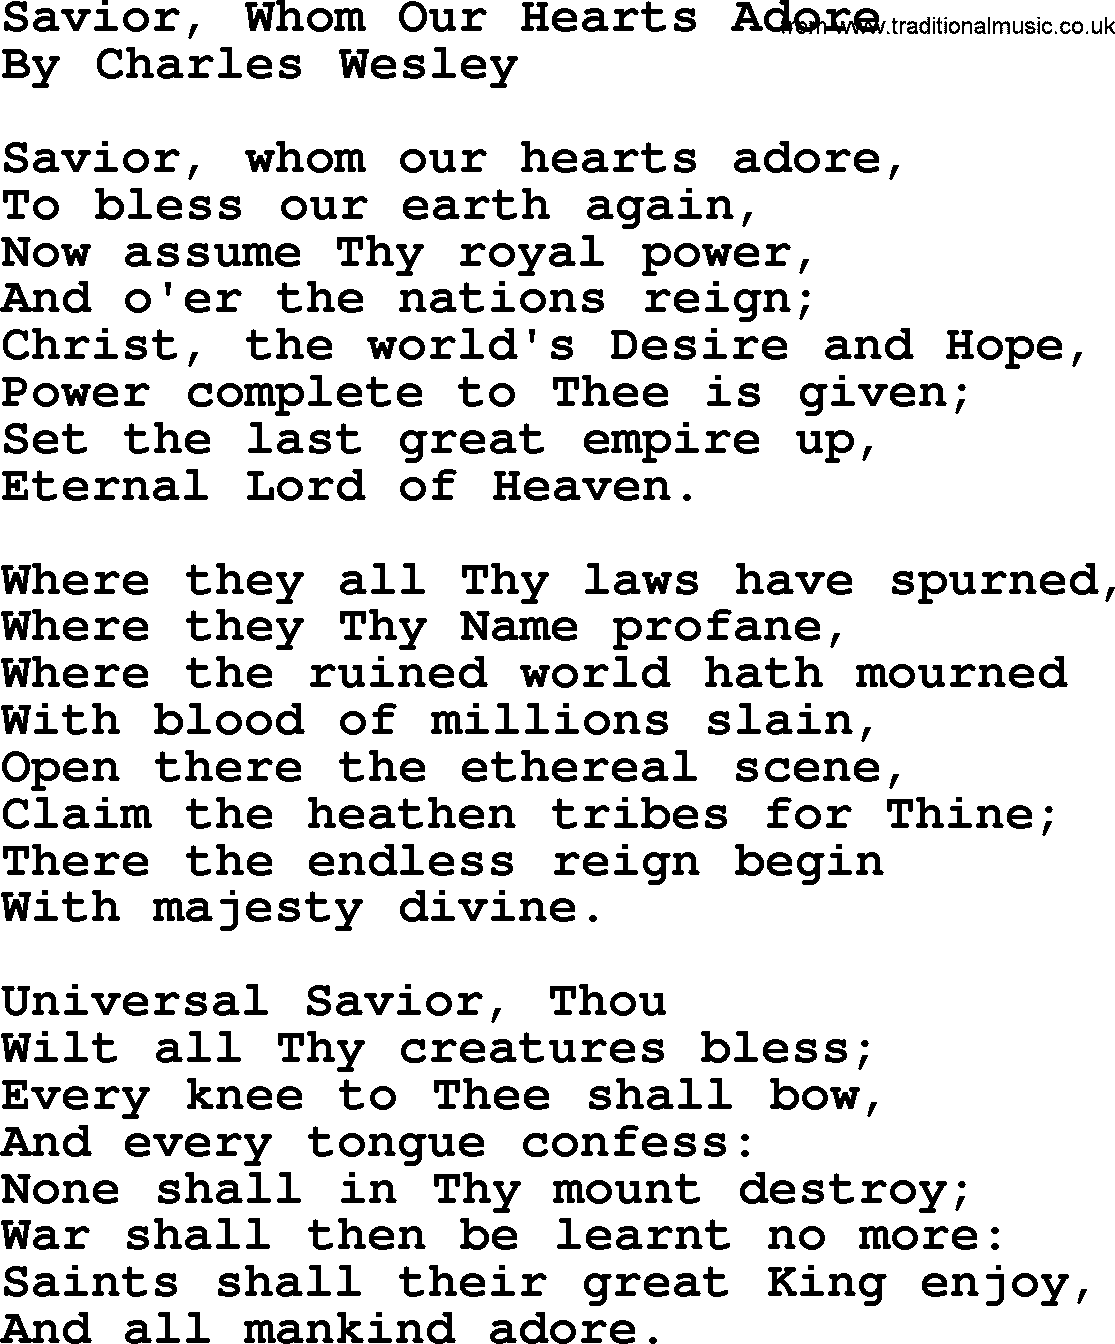 Charles Wesley hymn: Savior, Whom Our Hearts Adore, lyrics